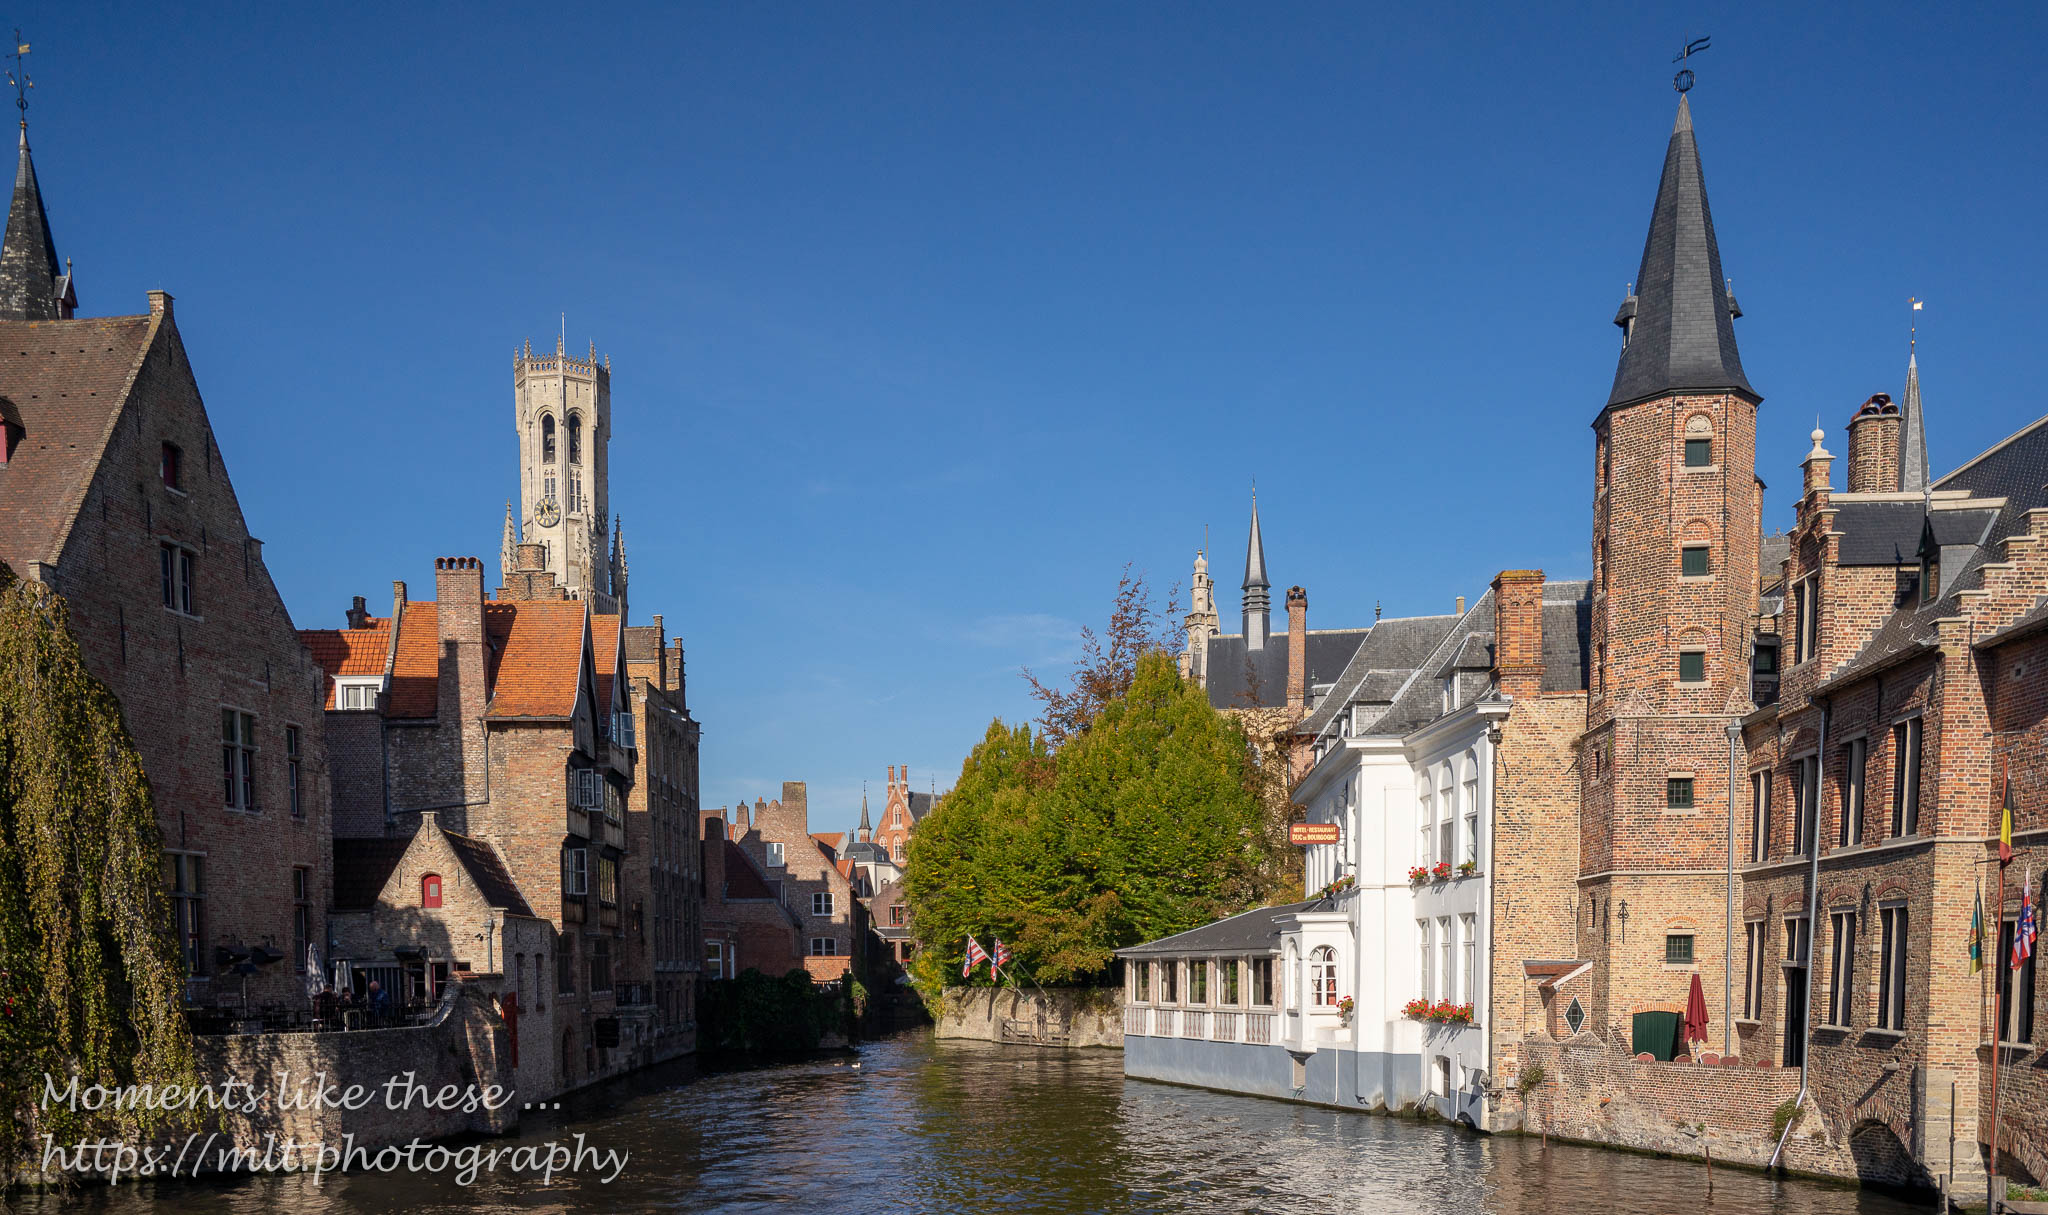 Rozenhoedkaai, Bruges